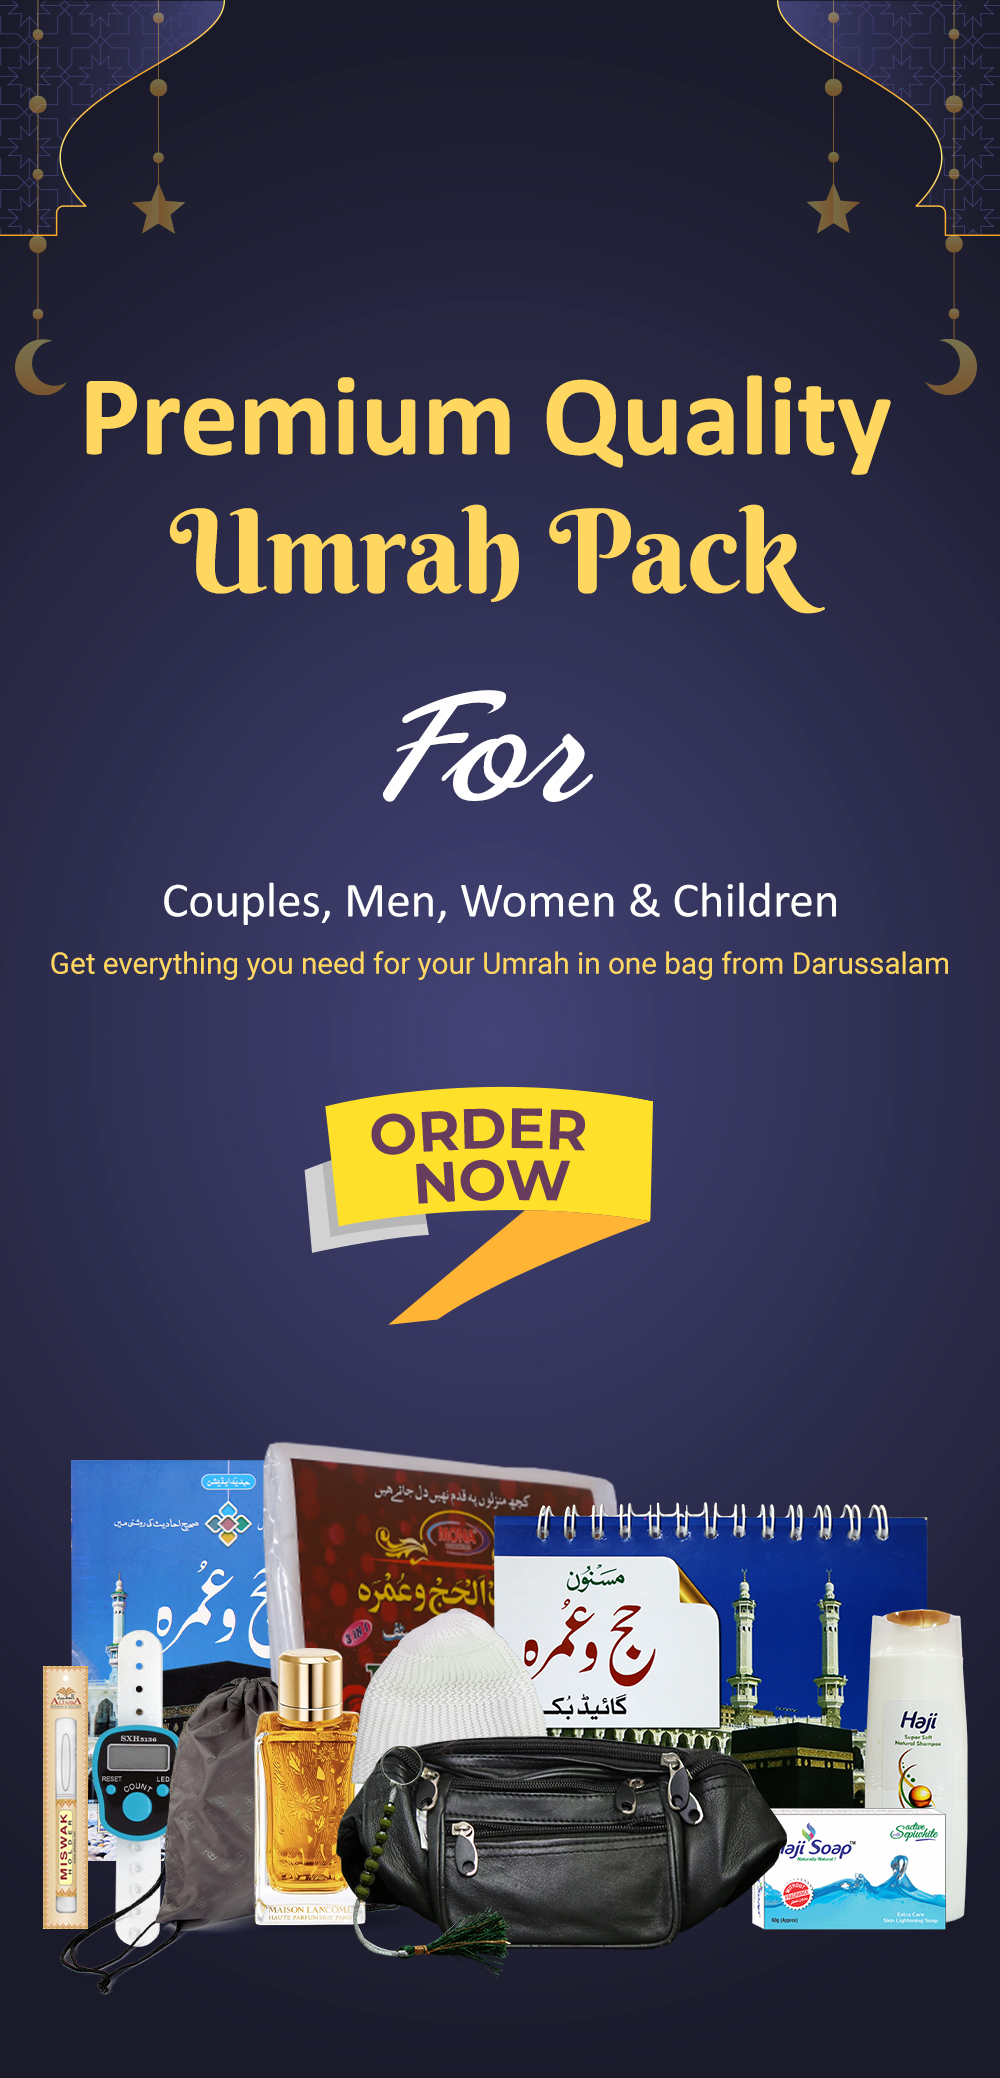 Umrah pack